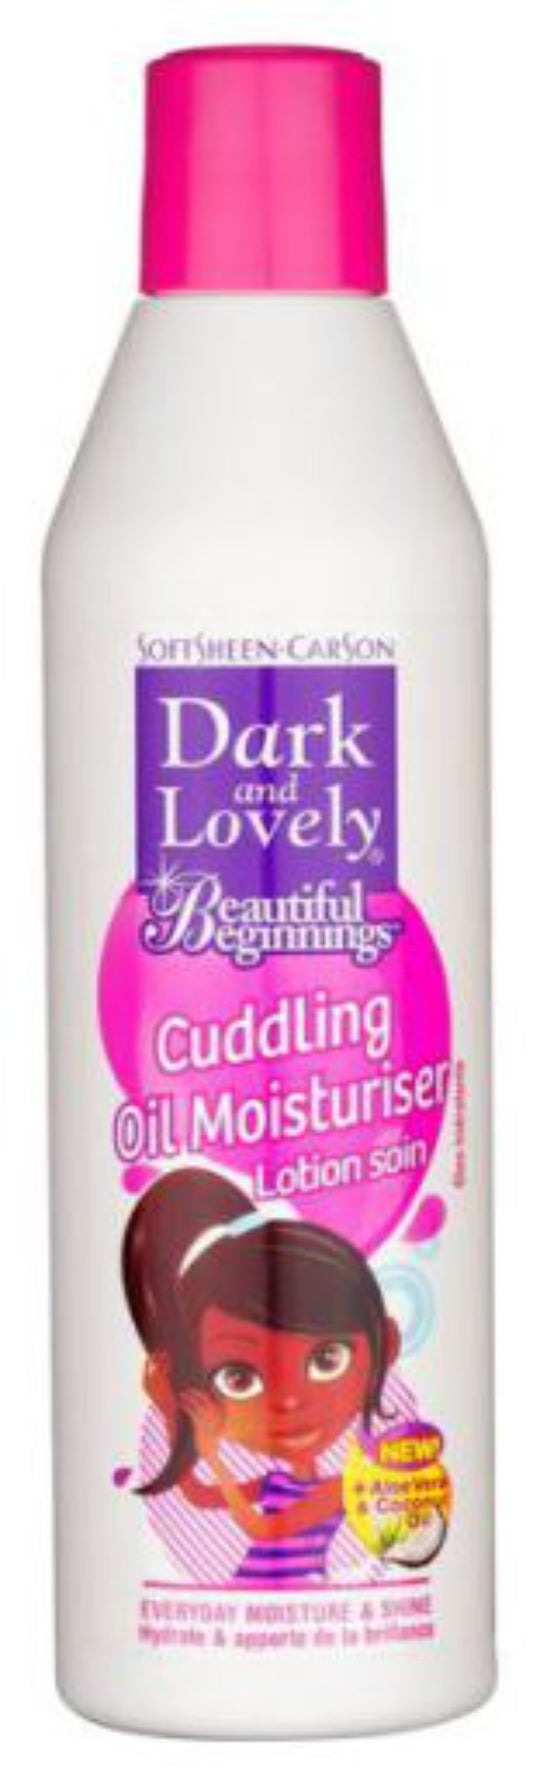 Dark & Lovely Beautiful Beginnings Cuddling Oil Moisturiser Lotion